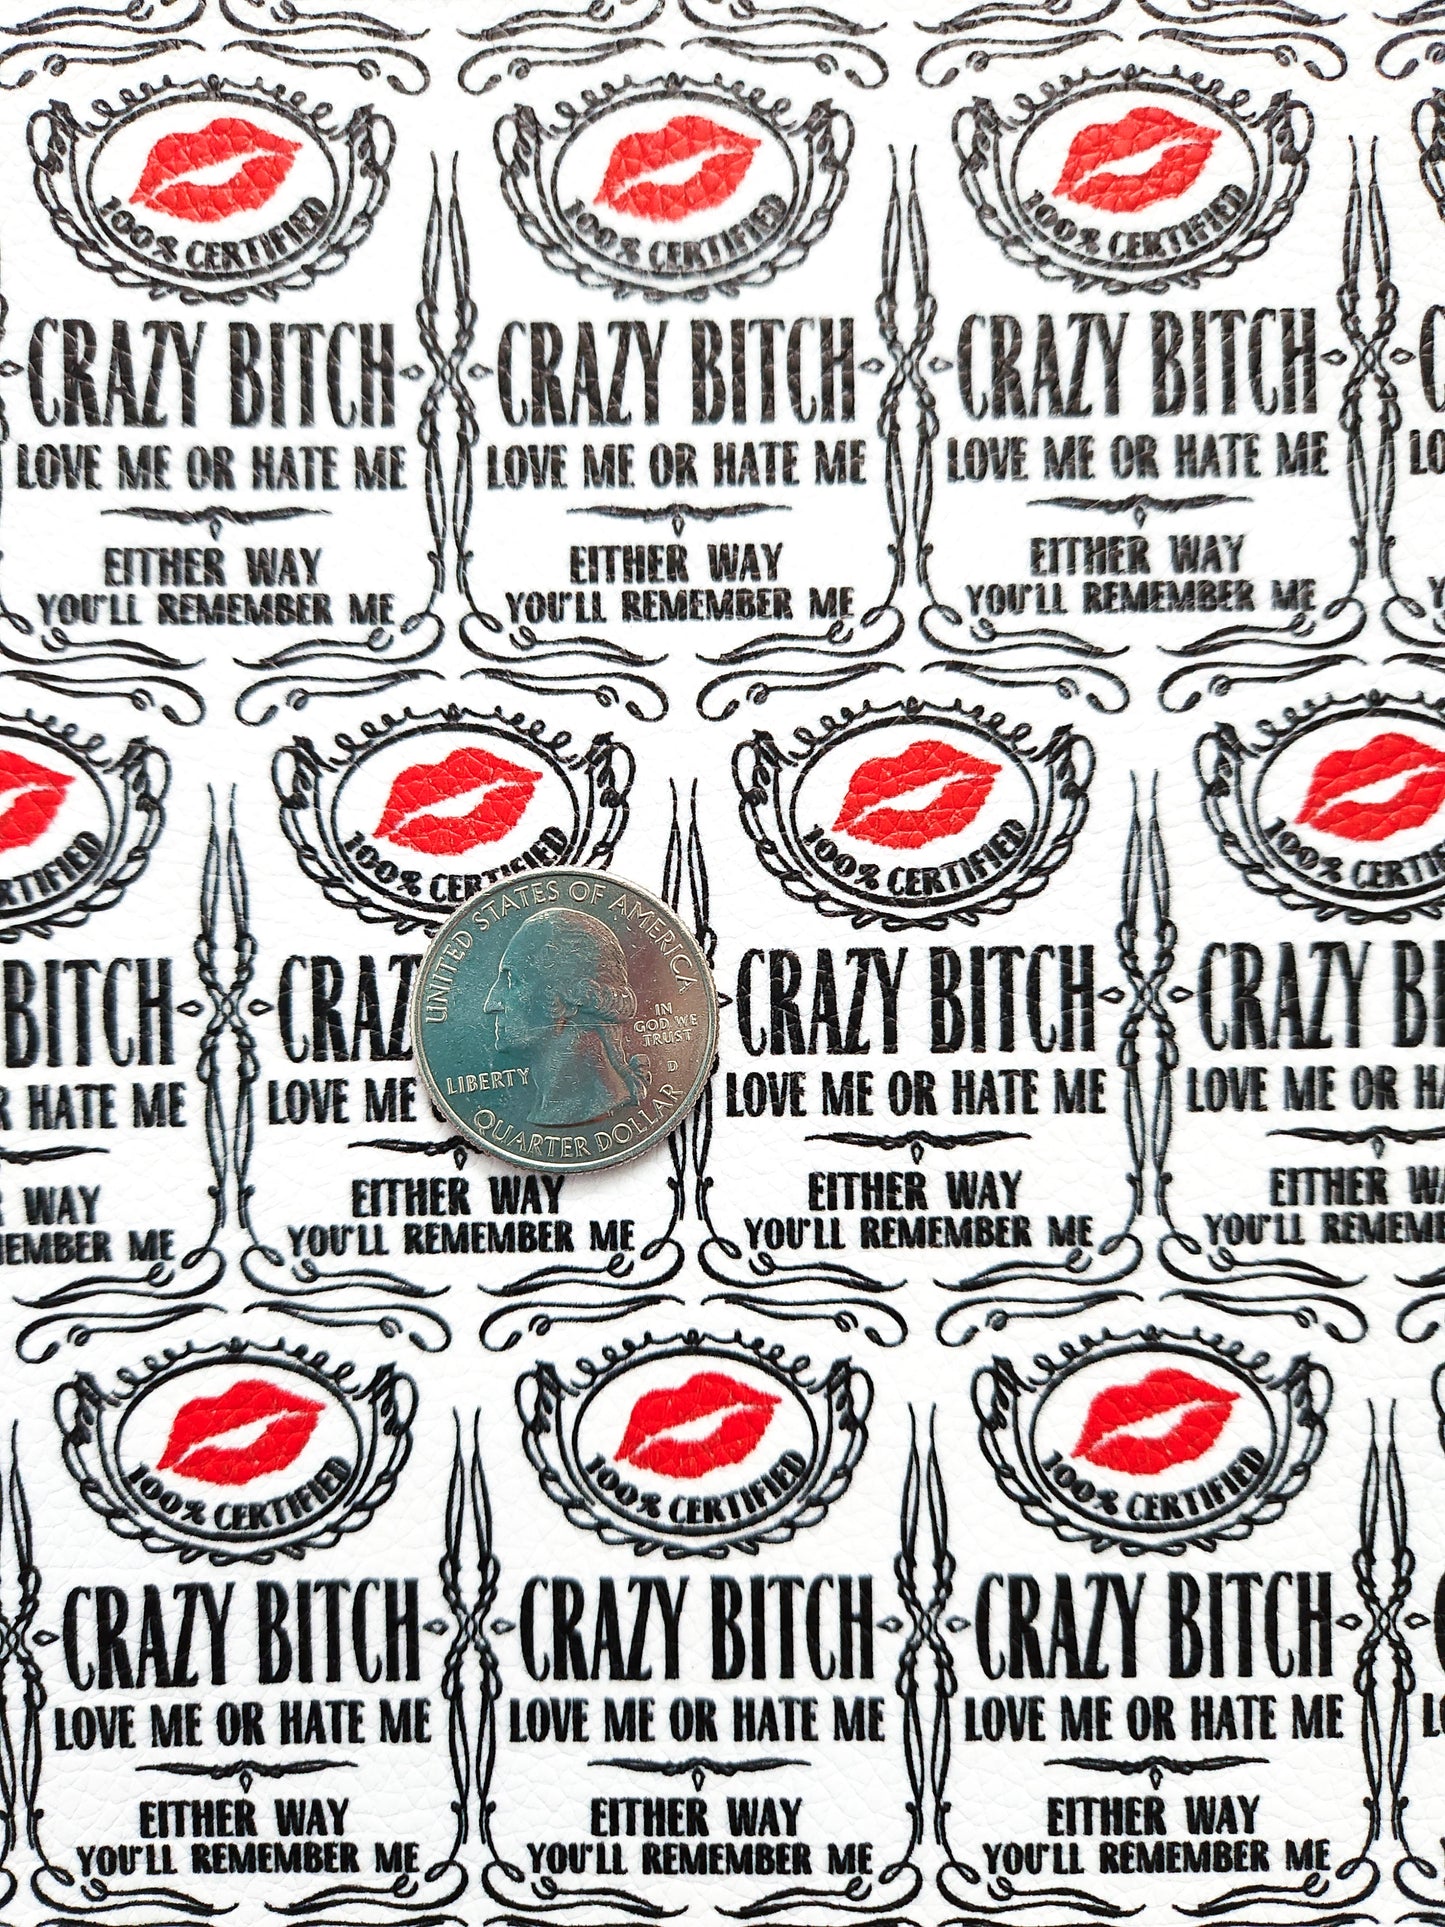 Crazy Bitch 9x12 faux leather sheet